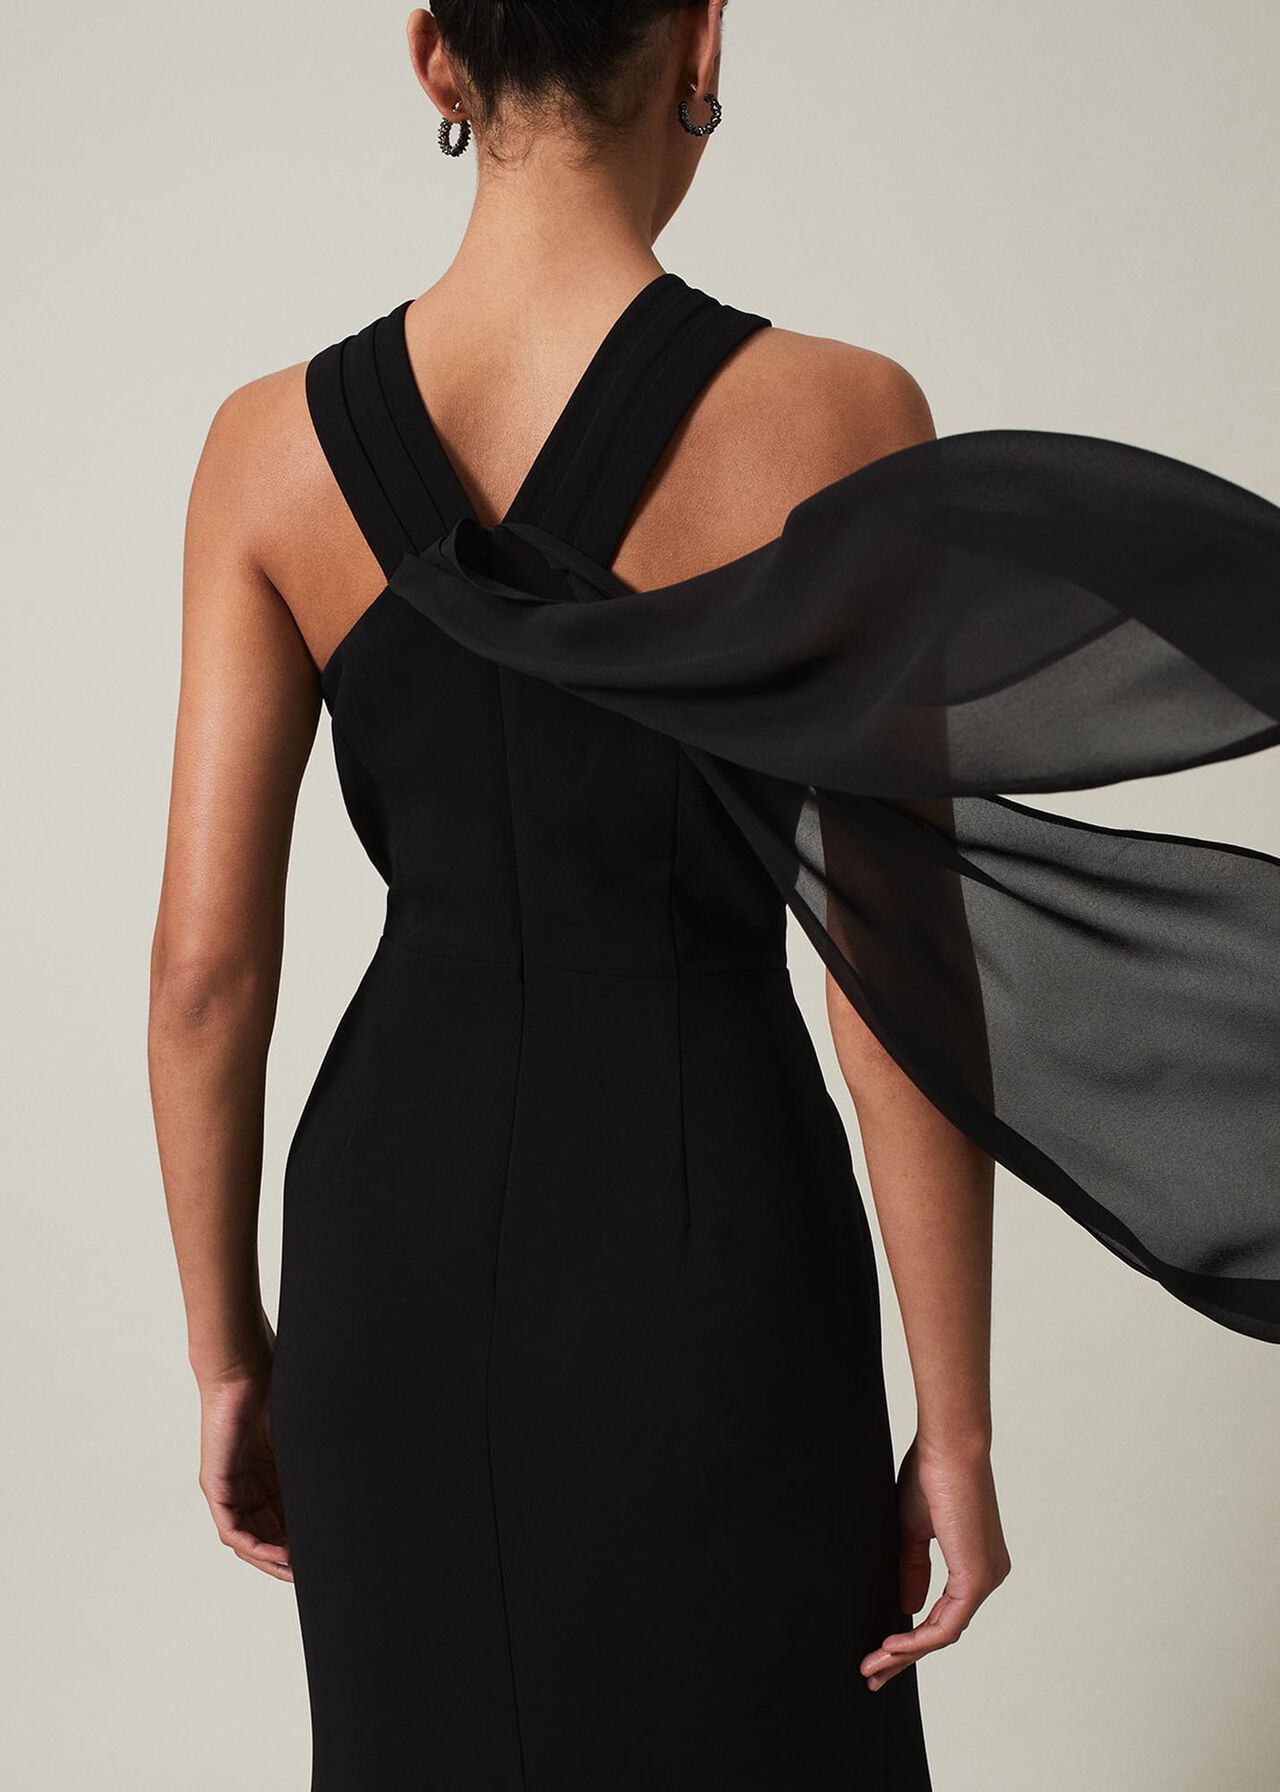 Danica Black Embellished Maxi Dress